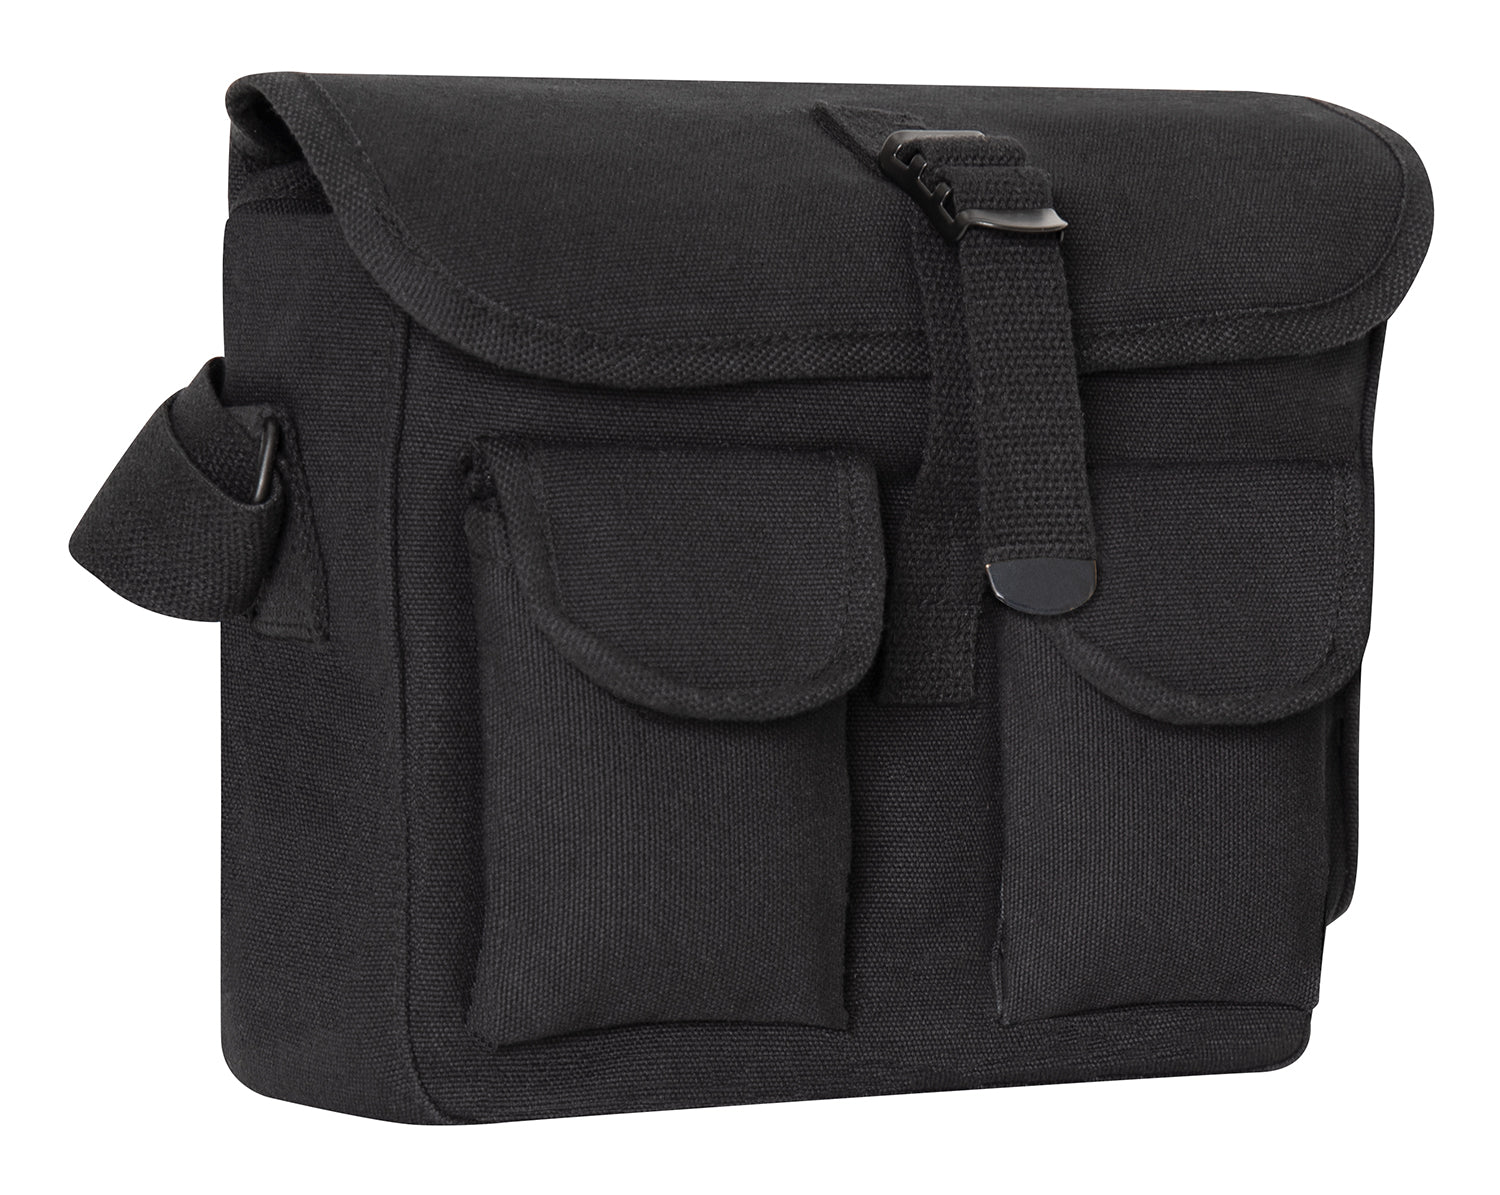 Milspec Canvas Ammo Shoulder Bag Sneak Previews MilTac Tactical Military Outdoor Gear Australia